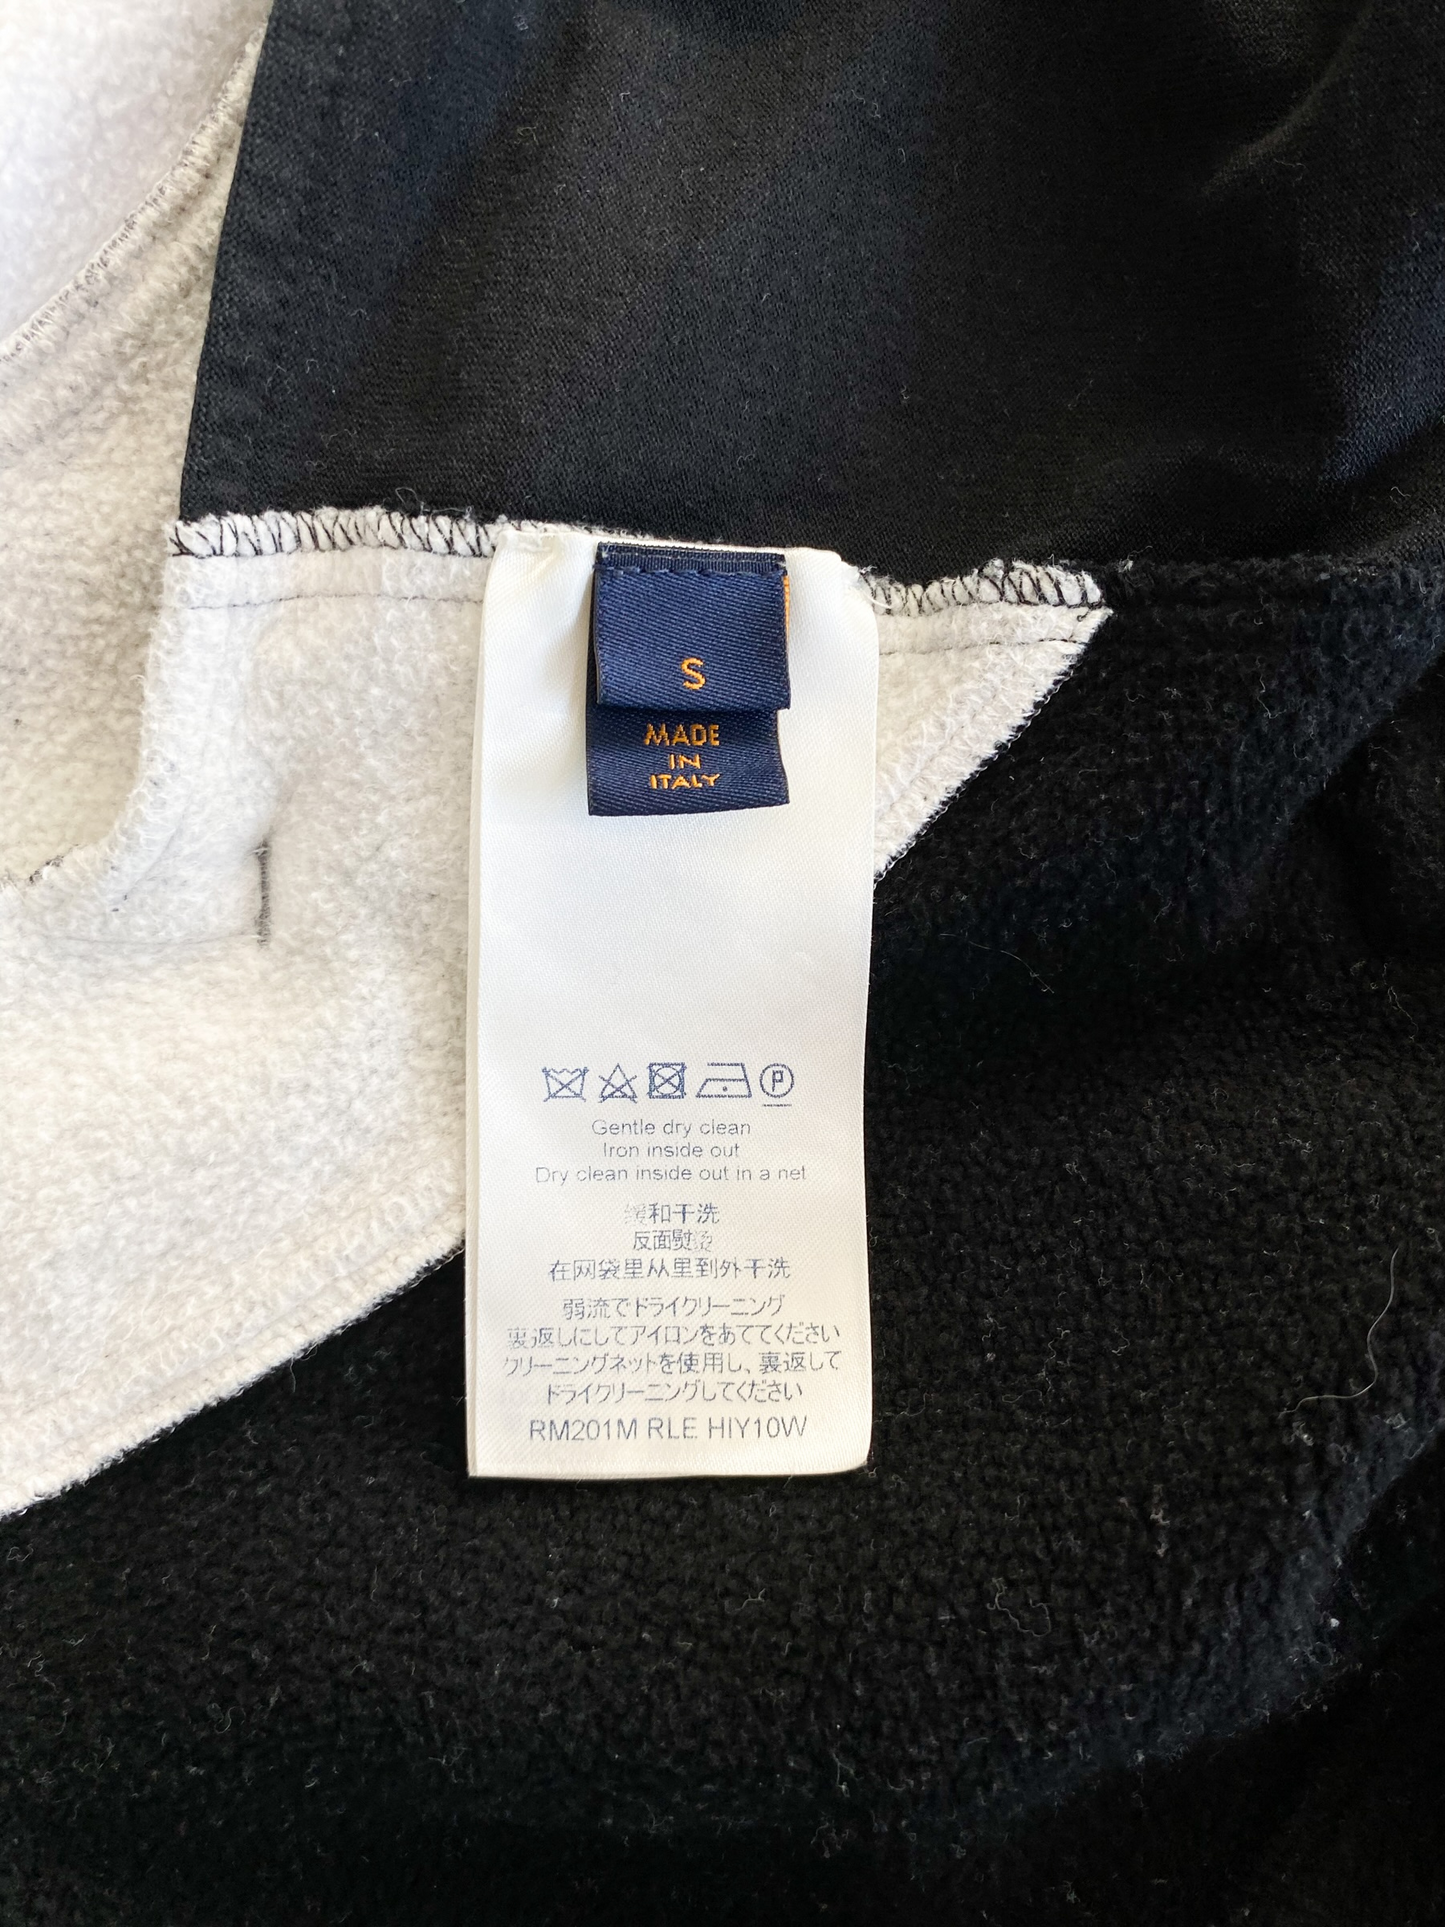 The Luxury Shopper - New season Louis Vuitton Circle Cut hoodie 😍  @suungjuuun 📸 . . . #lv #louisvuitton #lvcirclecuthoodie #lvhoodie #lvss20  #louisvuittonhoodie #monogram #luxury #luxuryfashion #personalshopping  #personalshopper